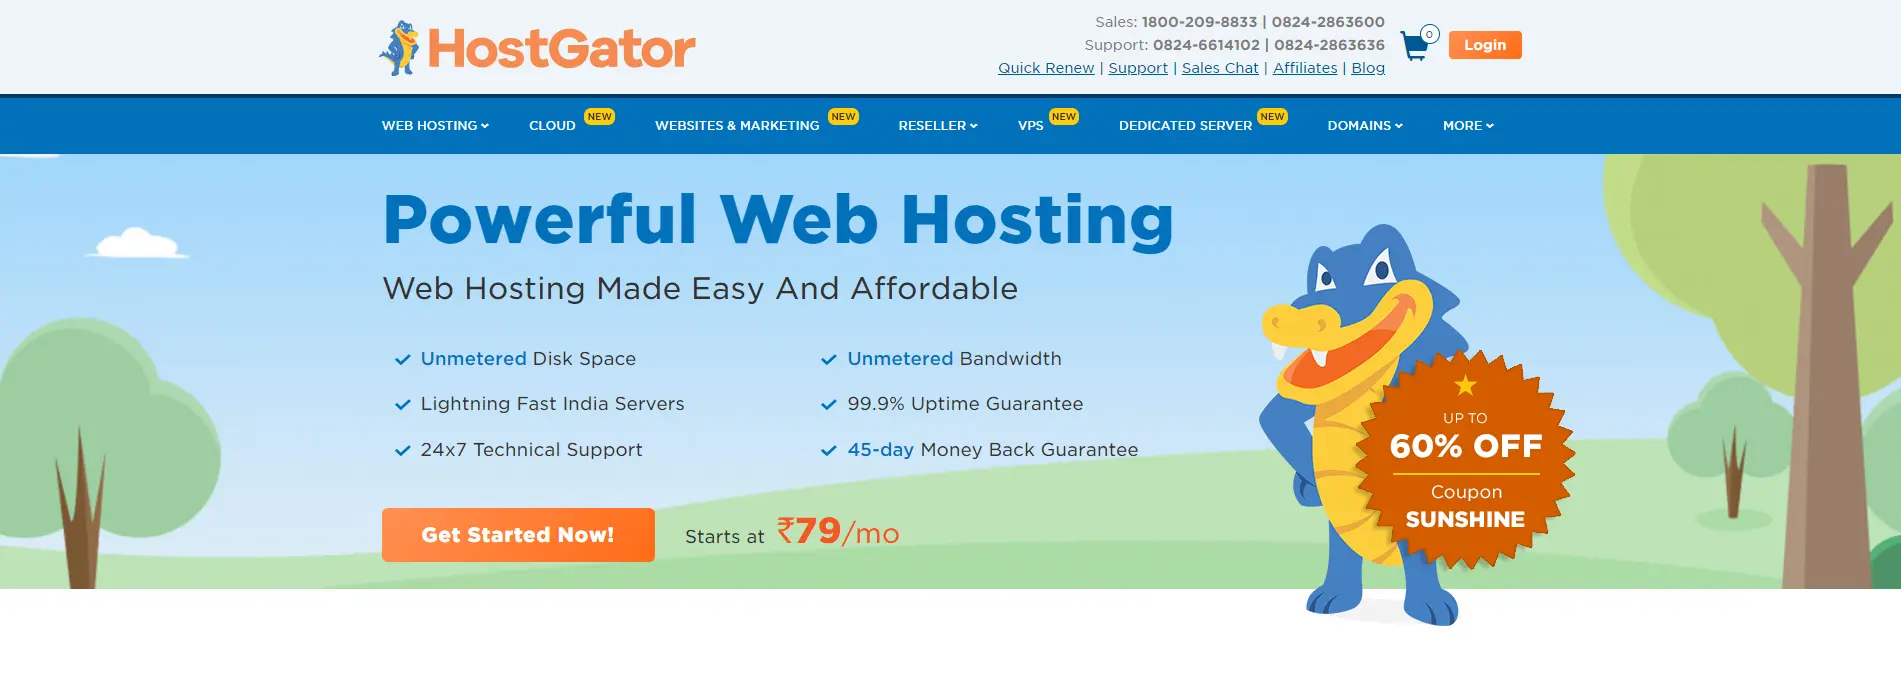 Hostgator - Membership Site Hosting Provider